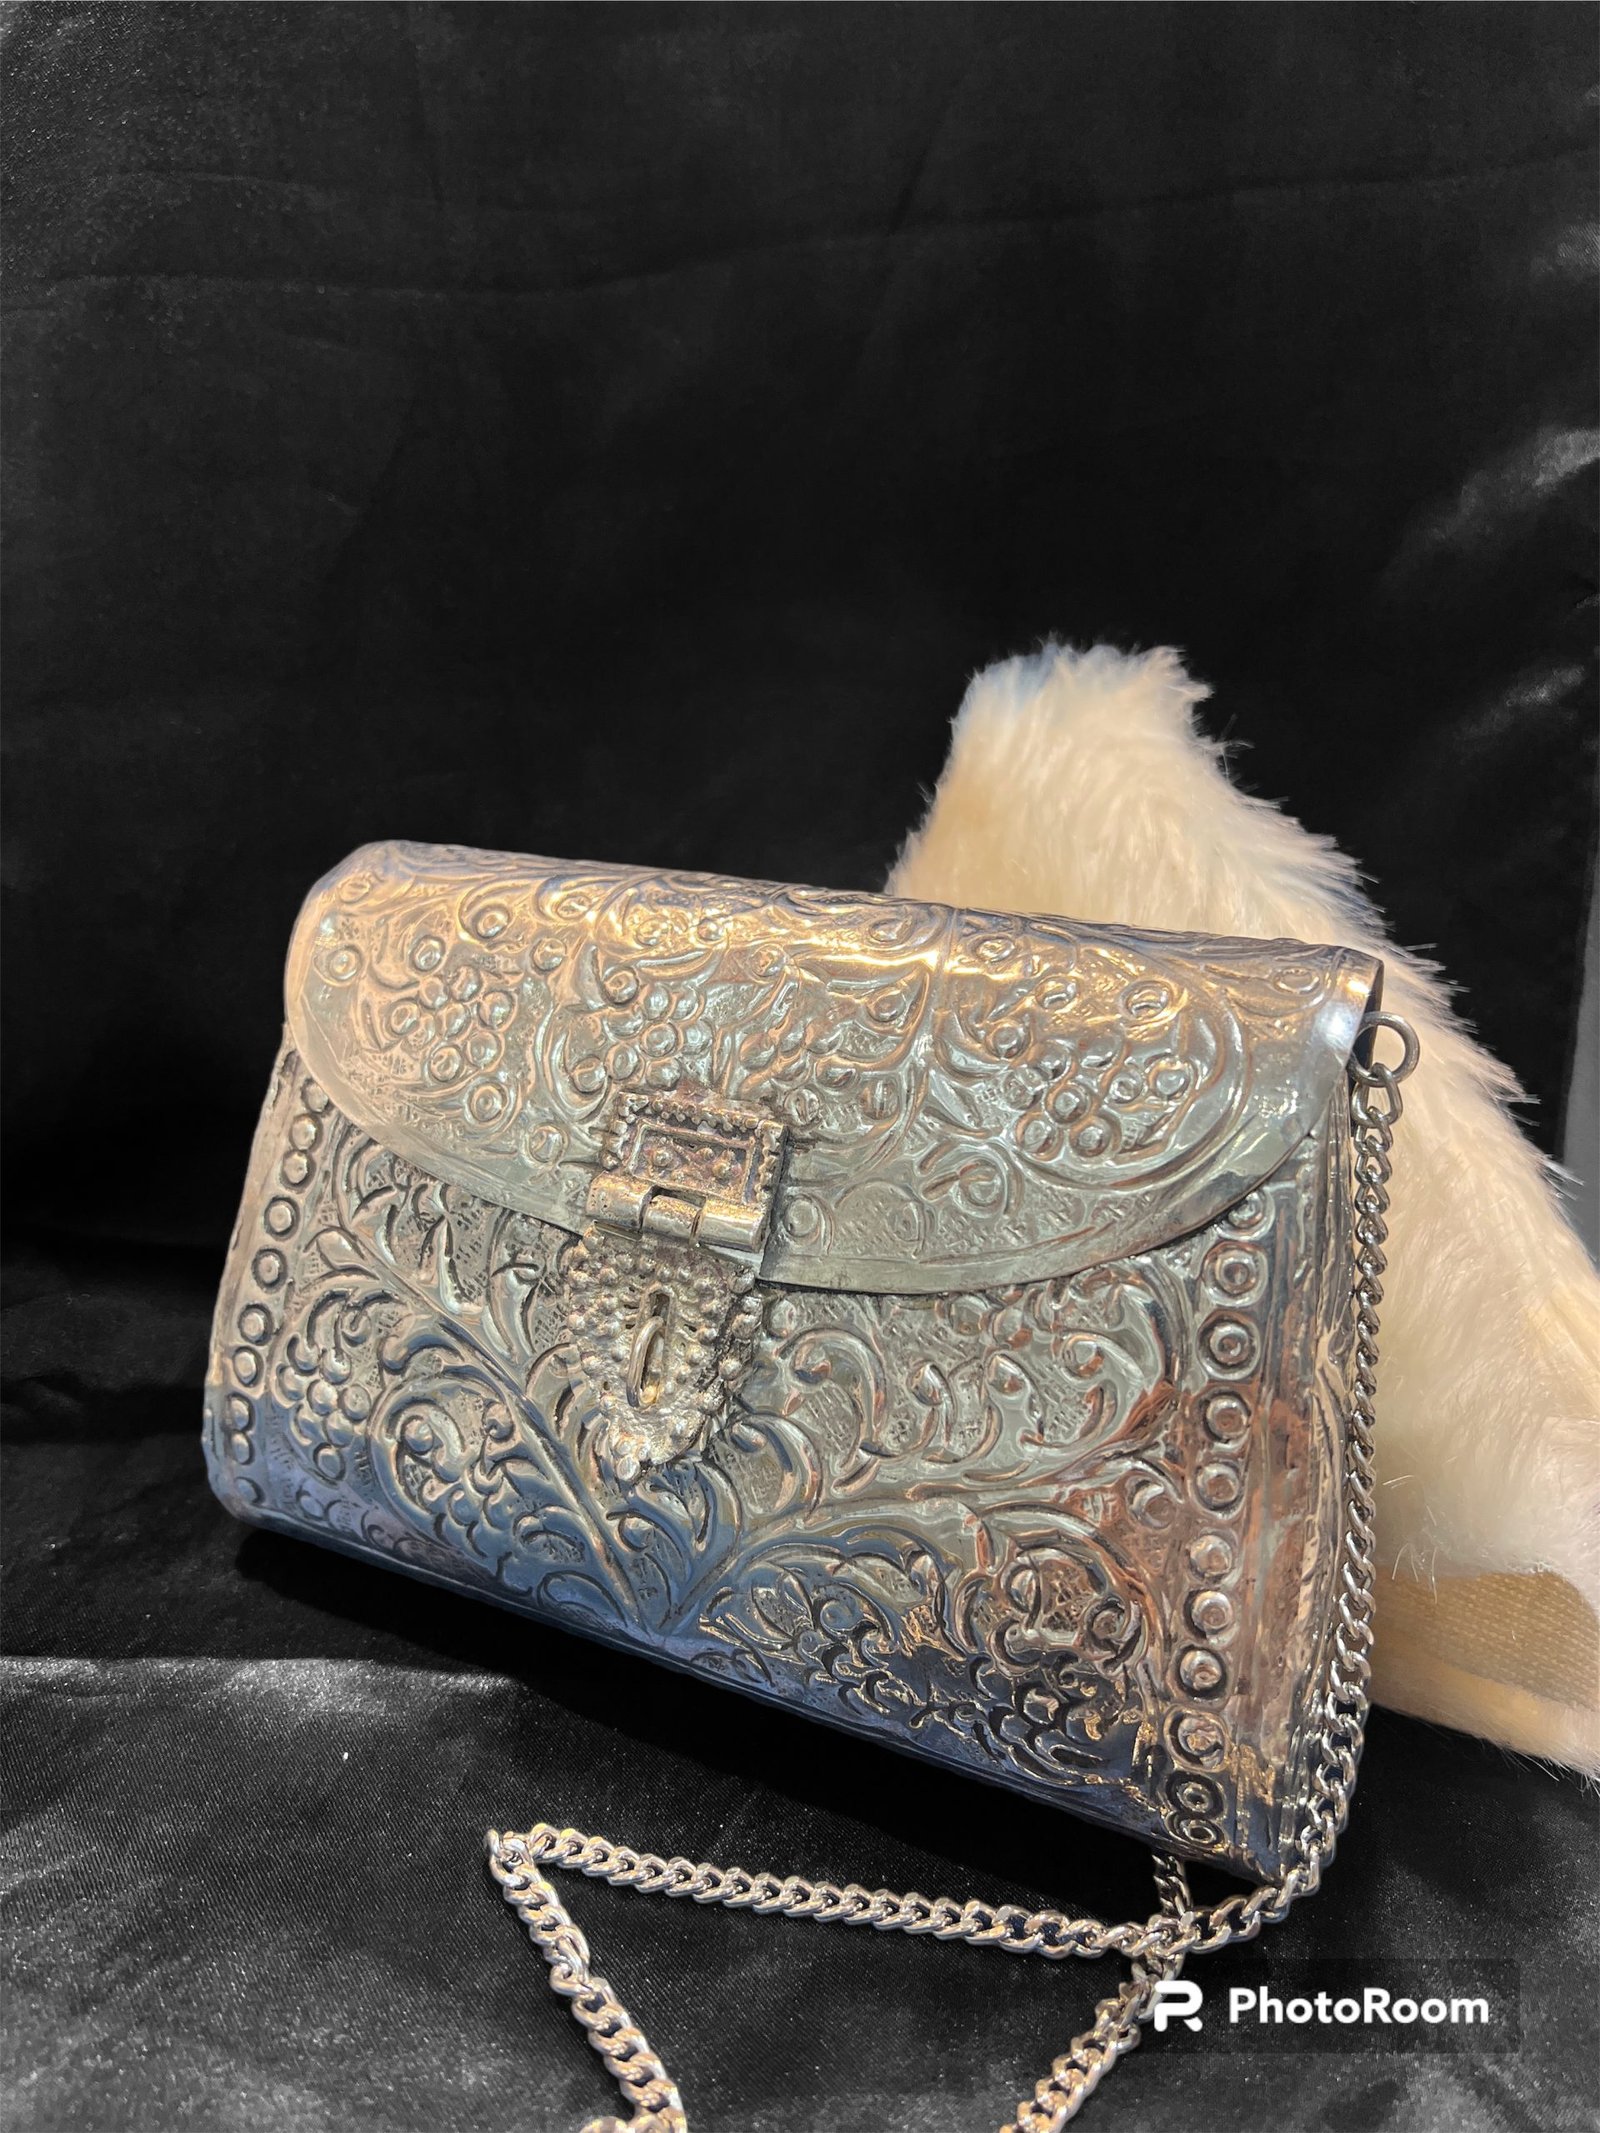 Ivanka Trump Metallic Silver Clutch Purse Bag | Silver clutch purse, Silver  clutch, Clutch purse